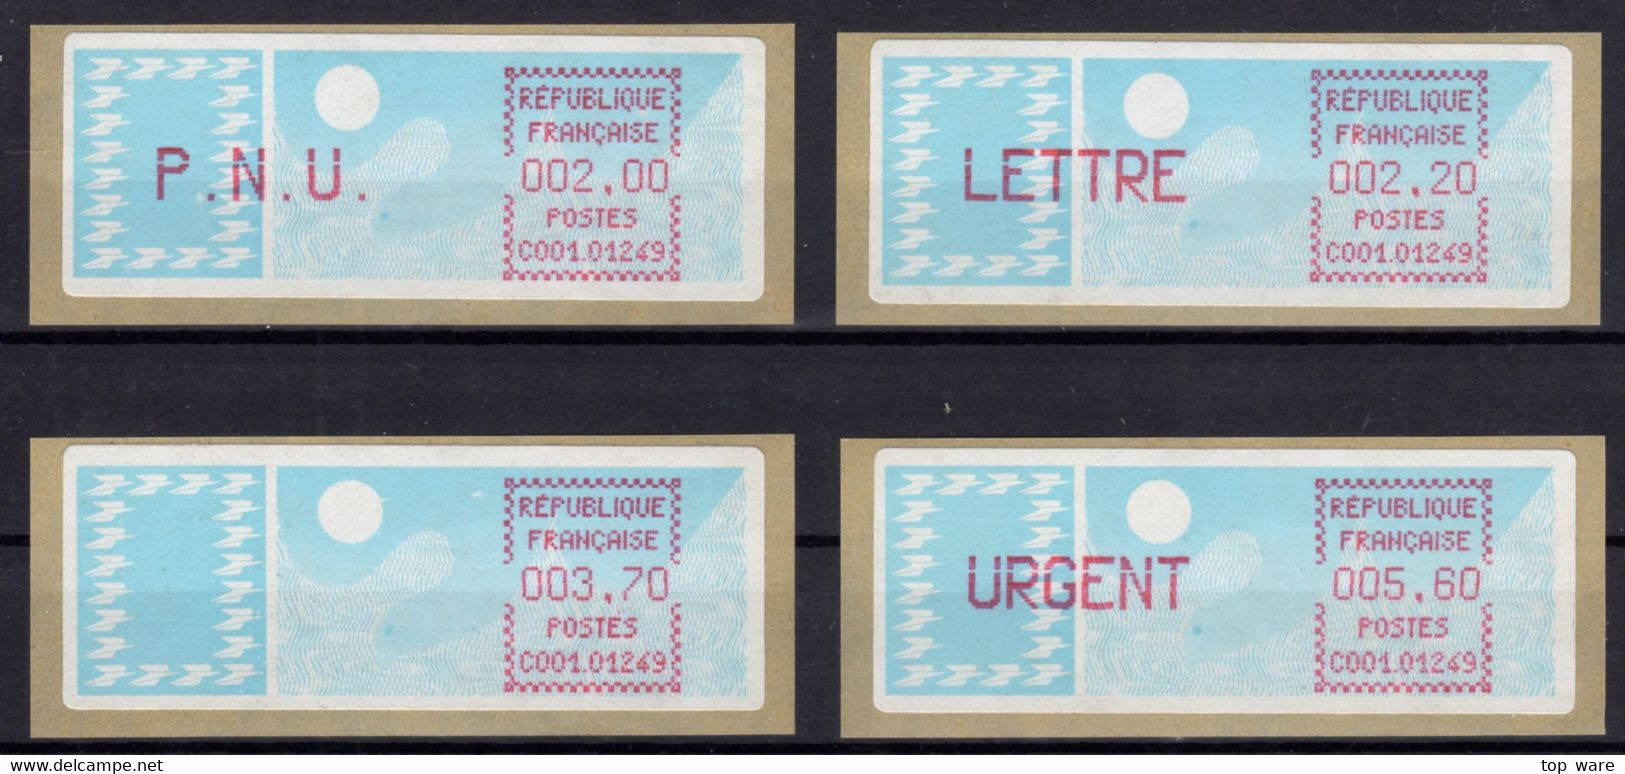 France ATM Stamps C001.01249 Michel 6.3 Zd Series ZS4 Neuf / MNH / Crouzet LSA Distributeurs Automatenmarken Frama Lisa - 1985 « Carrier » Papier